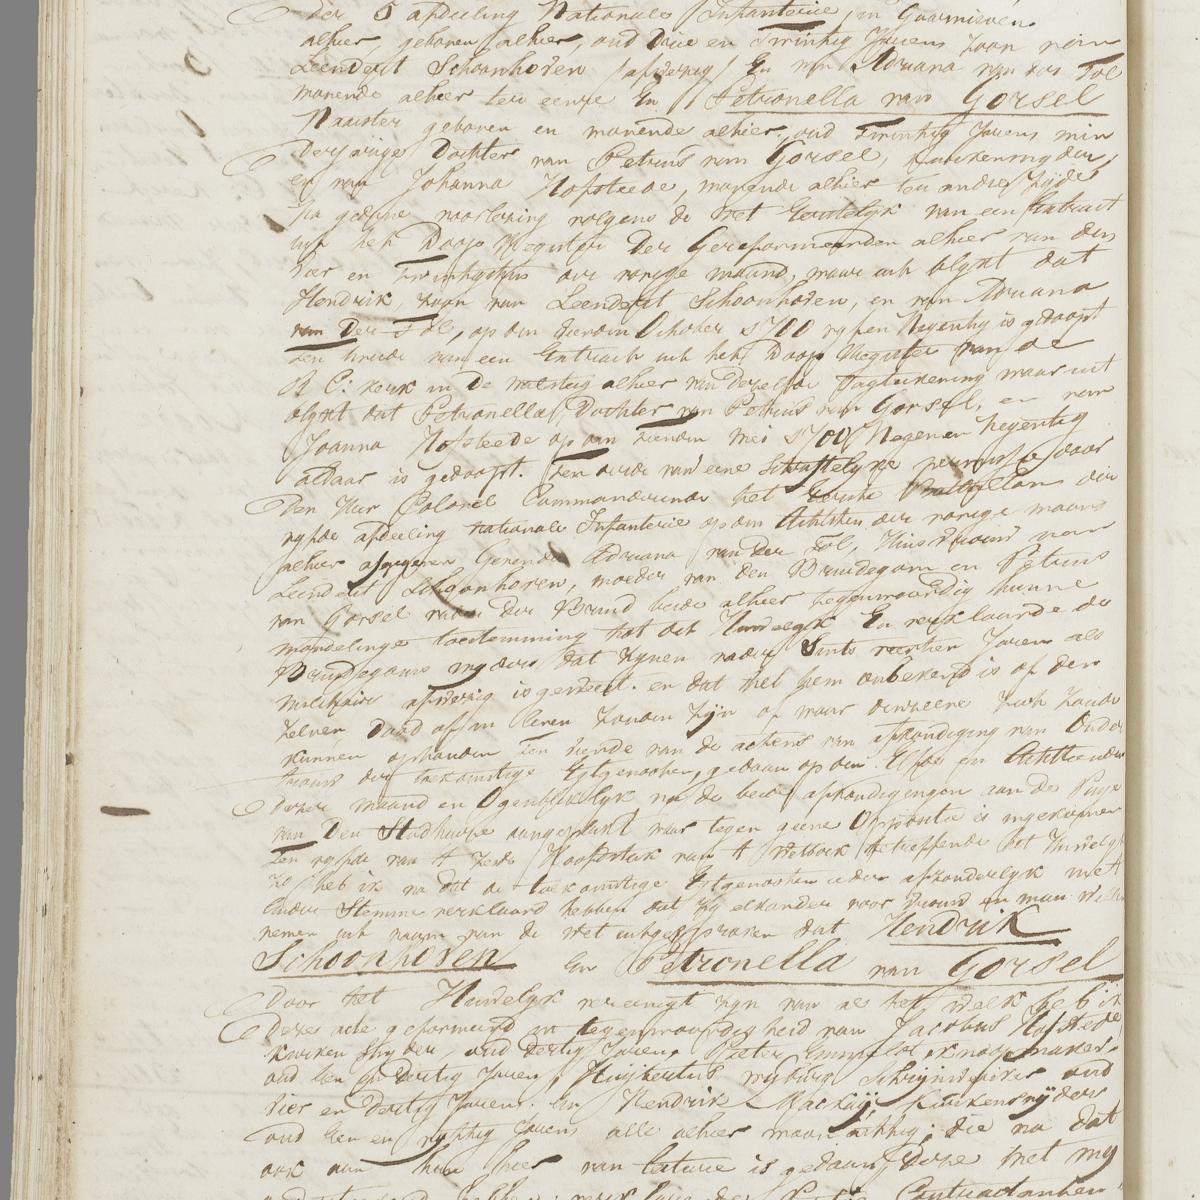 Civil registry of marriages, Utrecht, 1819, record 138